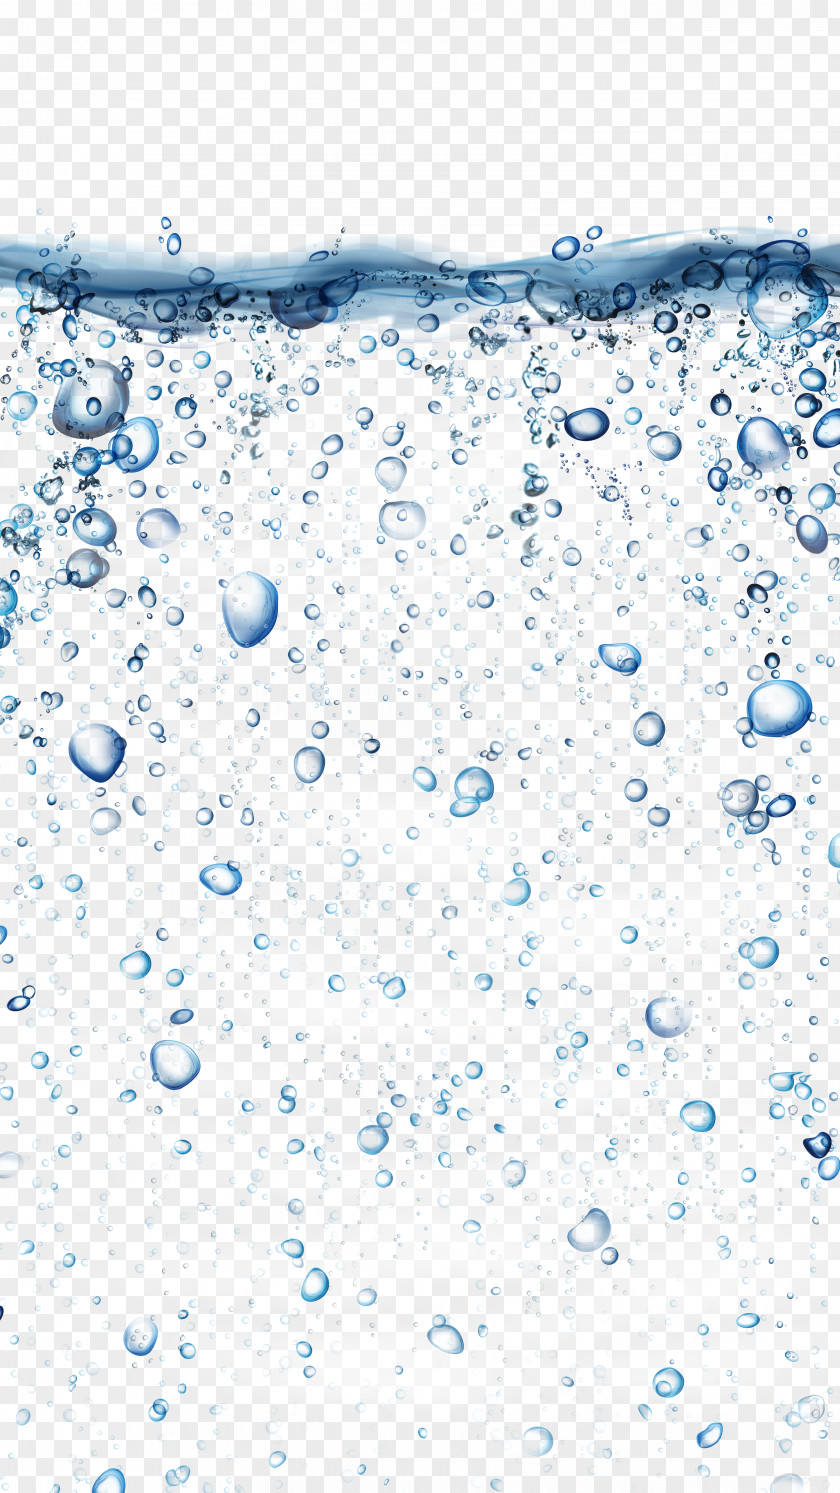 Oxygen Bubbles In The Water Soap Bubble Drop PNG